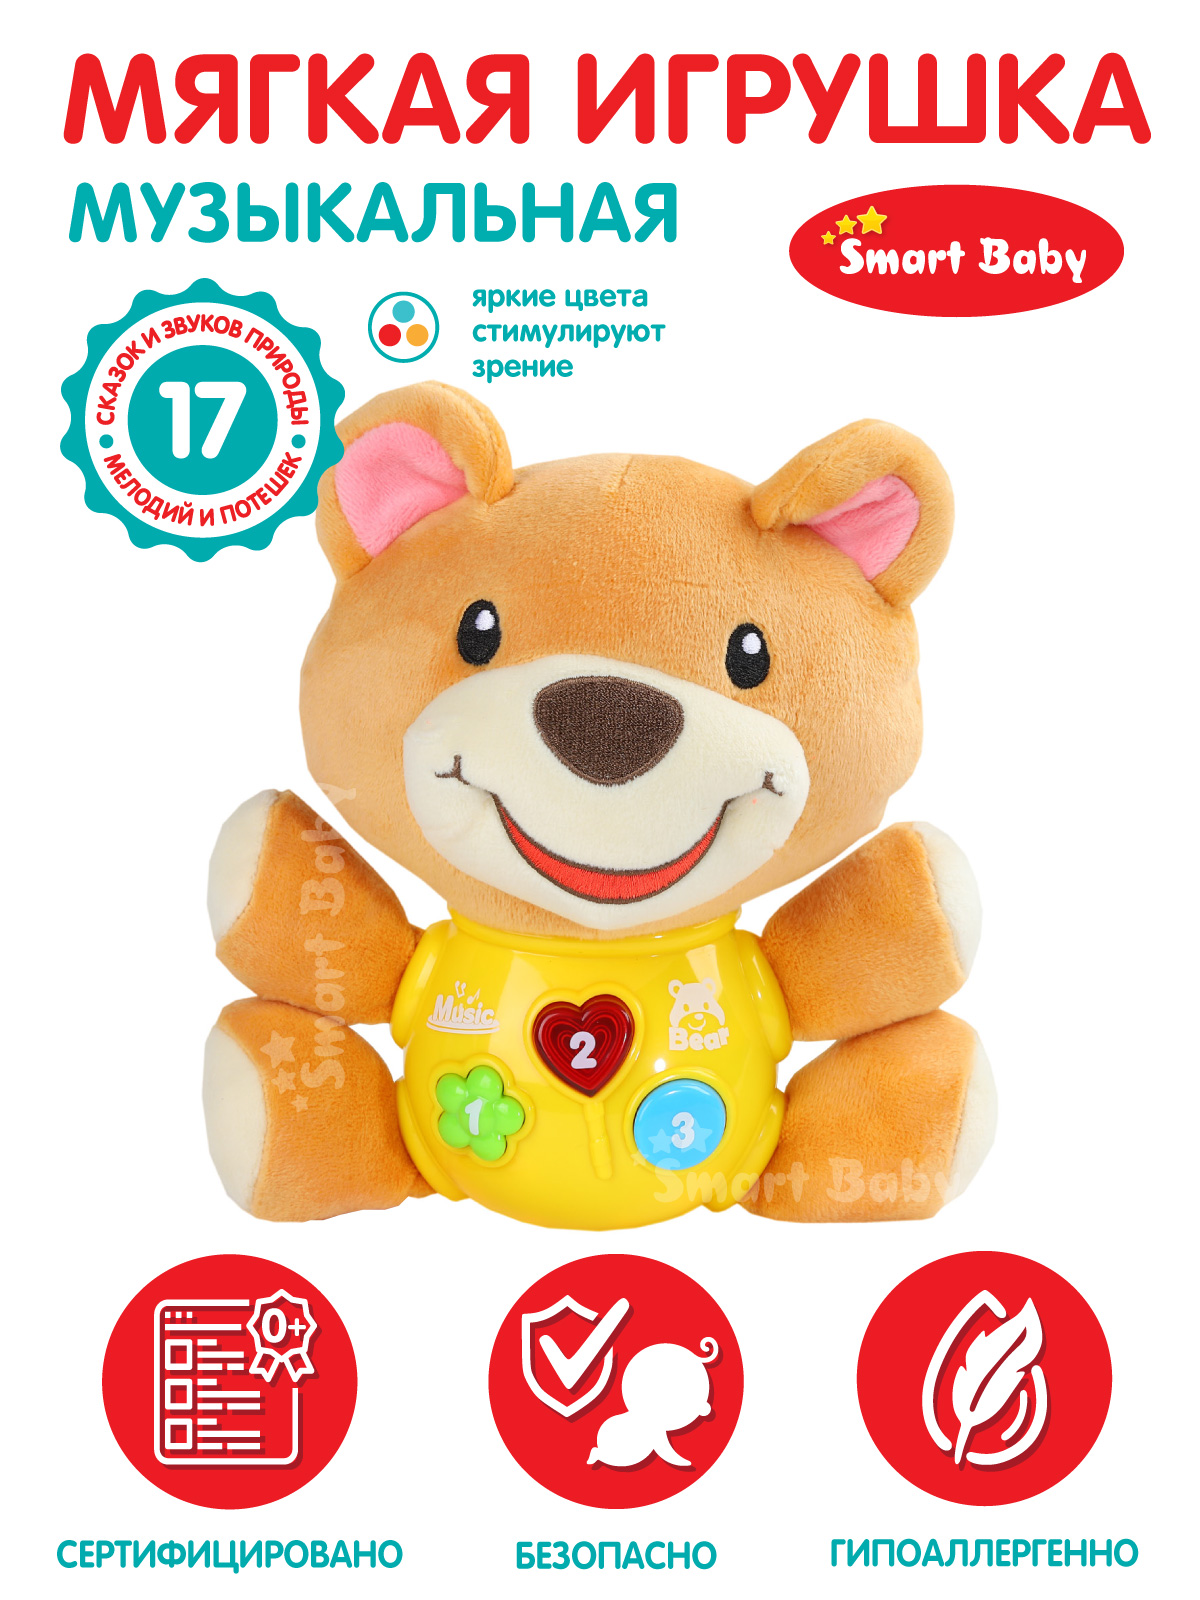 Развивающая мягкая игрушка Smart Baby Мишка ТМ Smart Baby, свет, звук, JB0334072 развивающая игрушка e7975a медведь